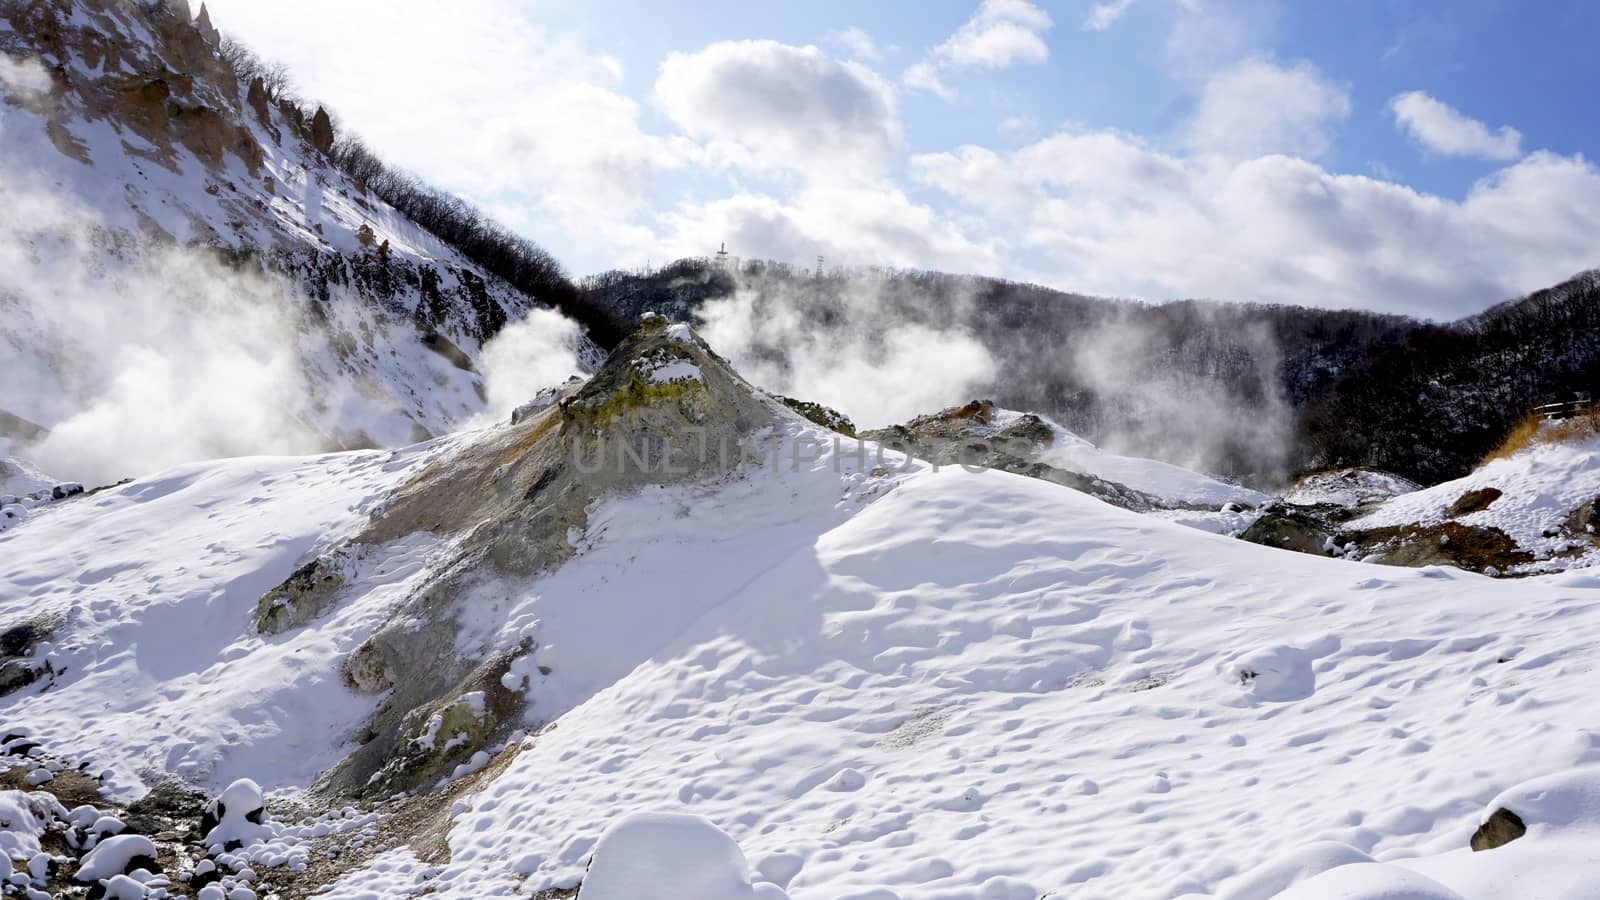 Noboribetsu onsen snow mountain and the mist winter national park in Jigokudani, Hokkaido, Japan